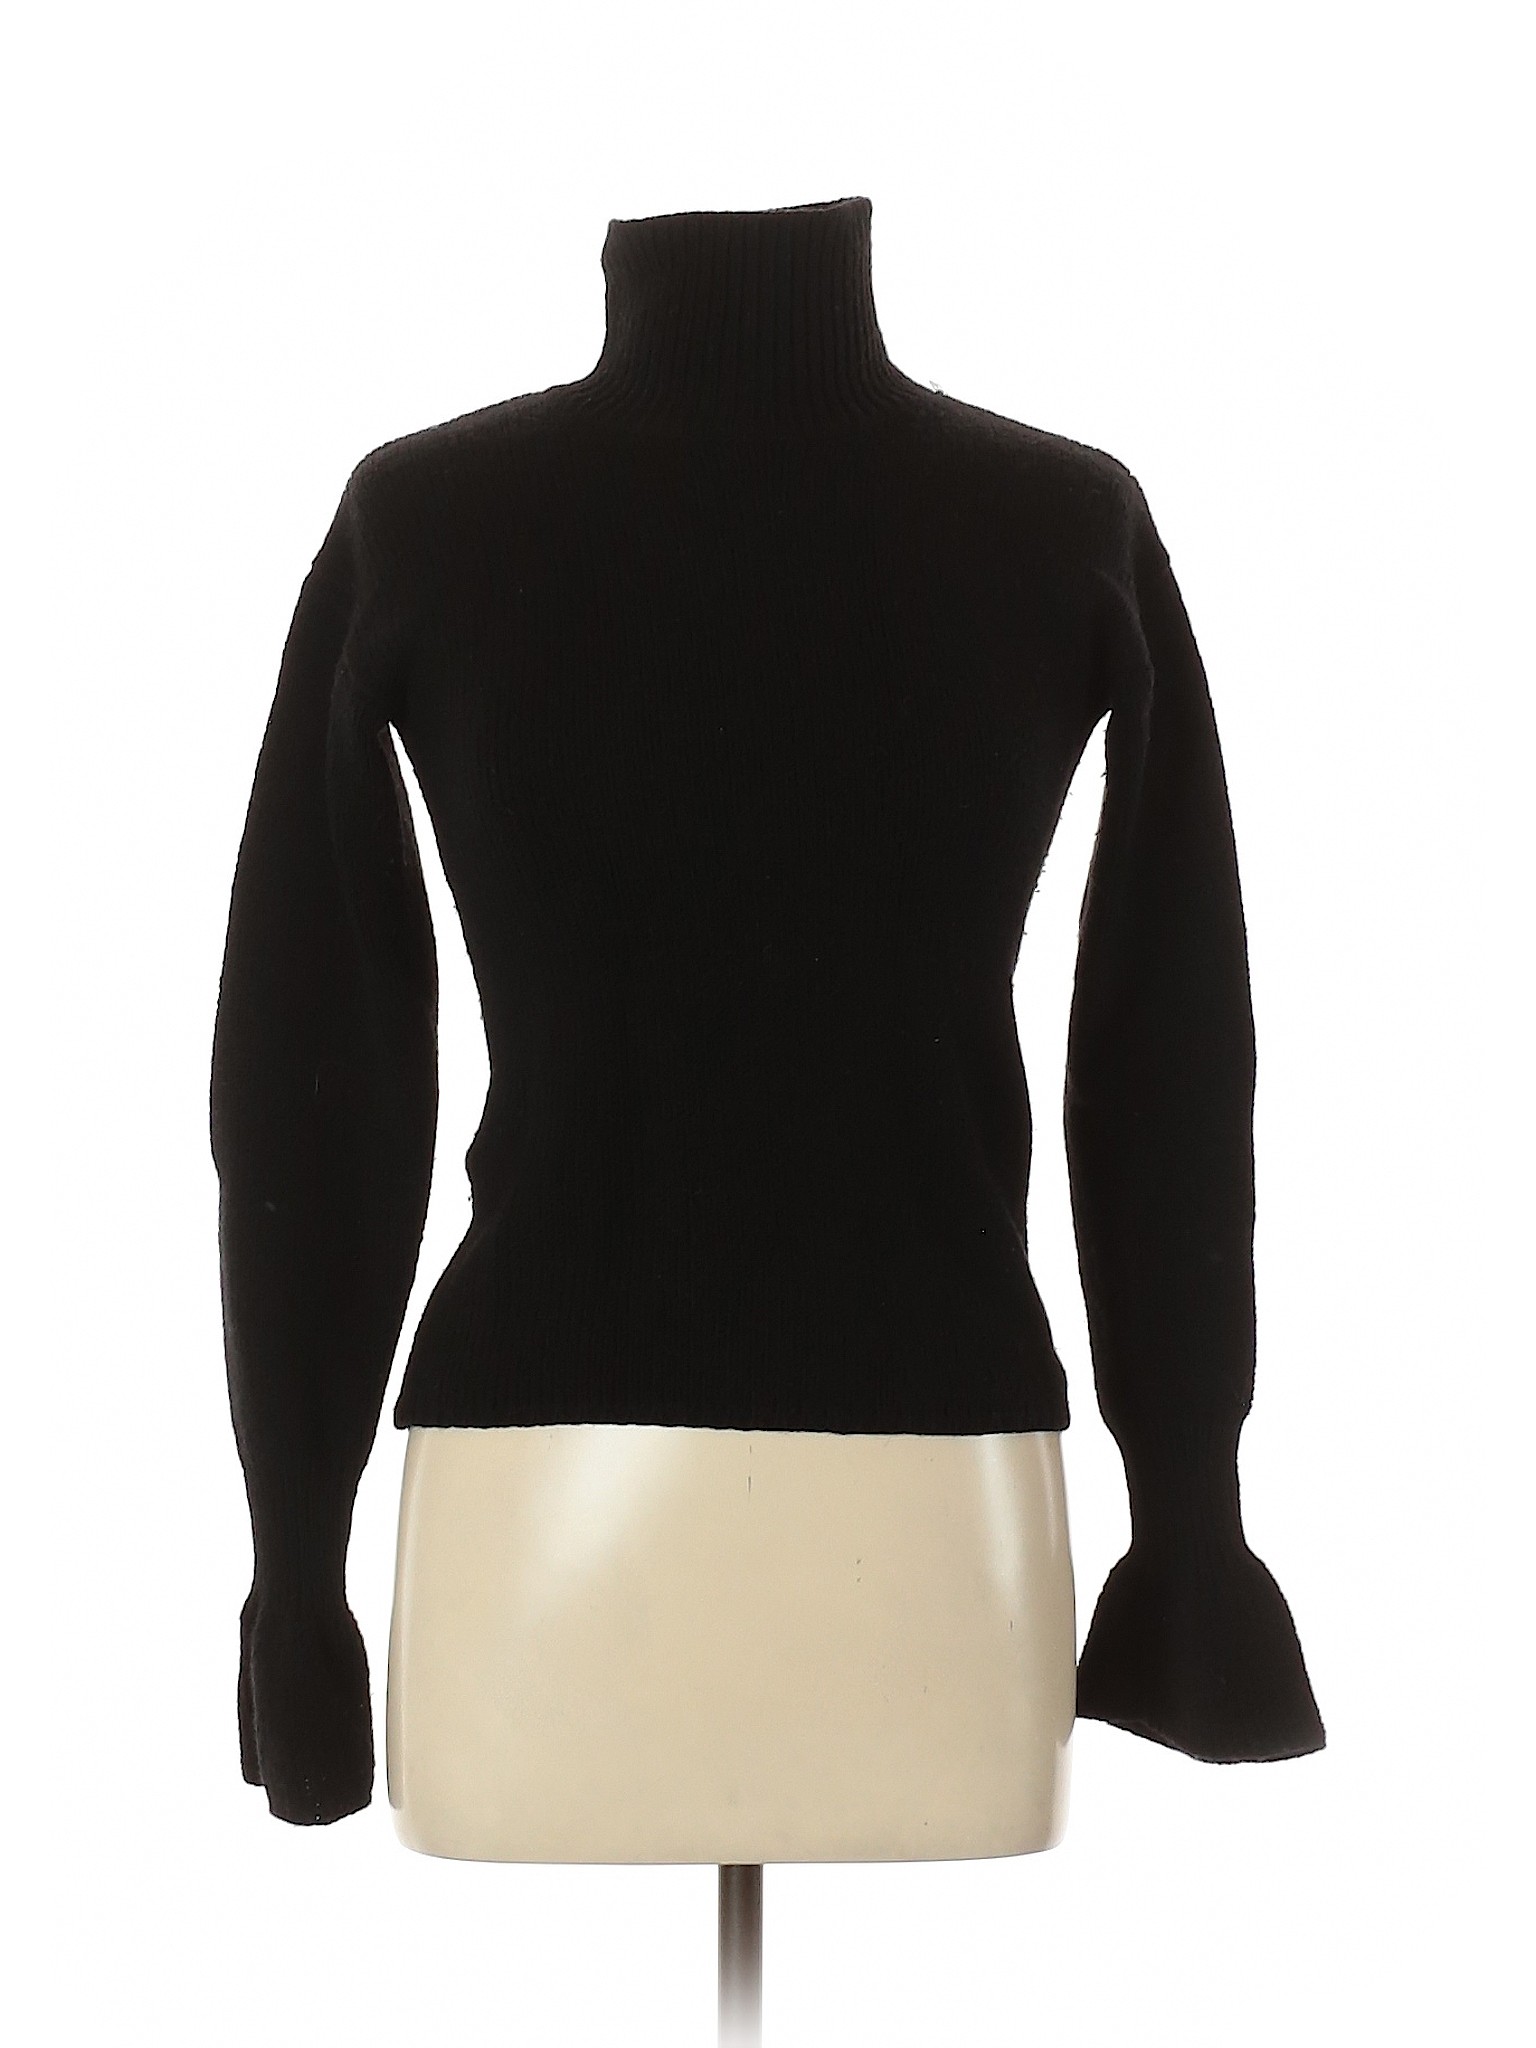 DKNY Women Black Long Sleeve Turtleneck M | eBay